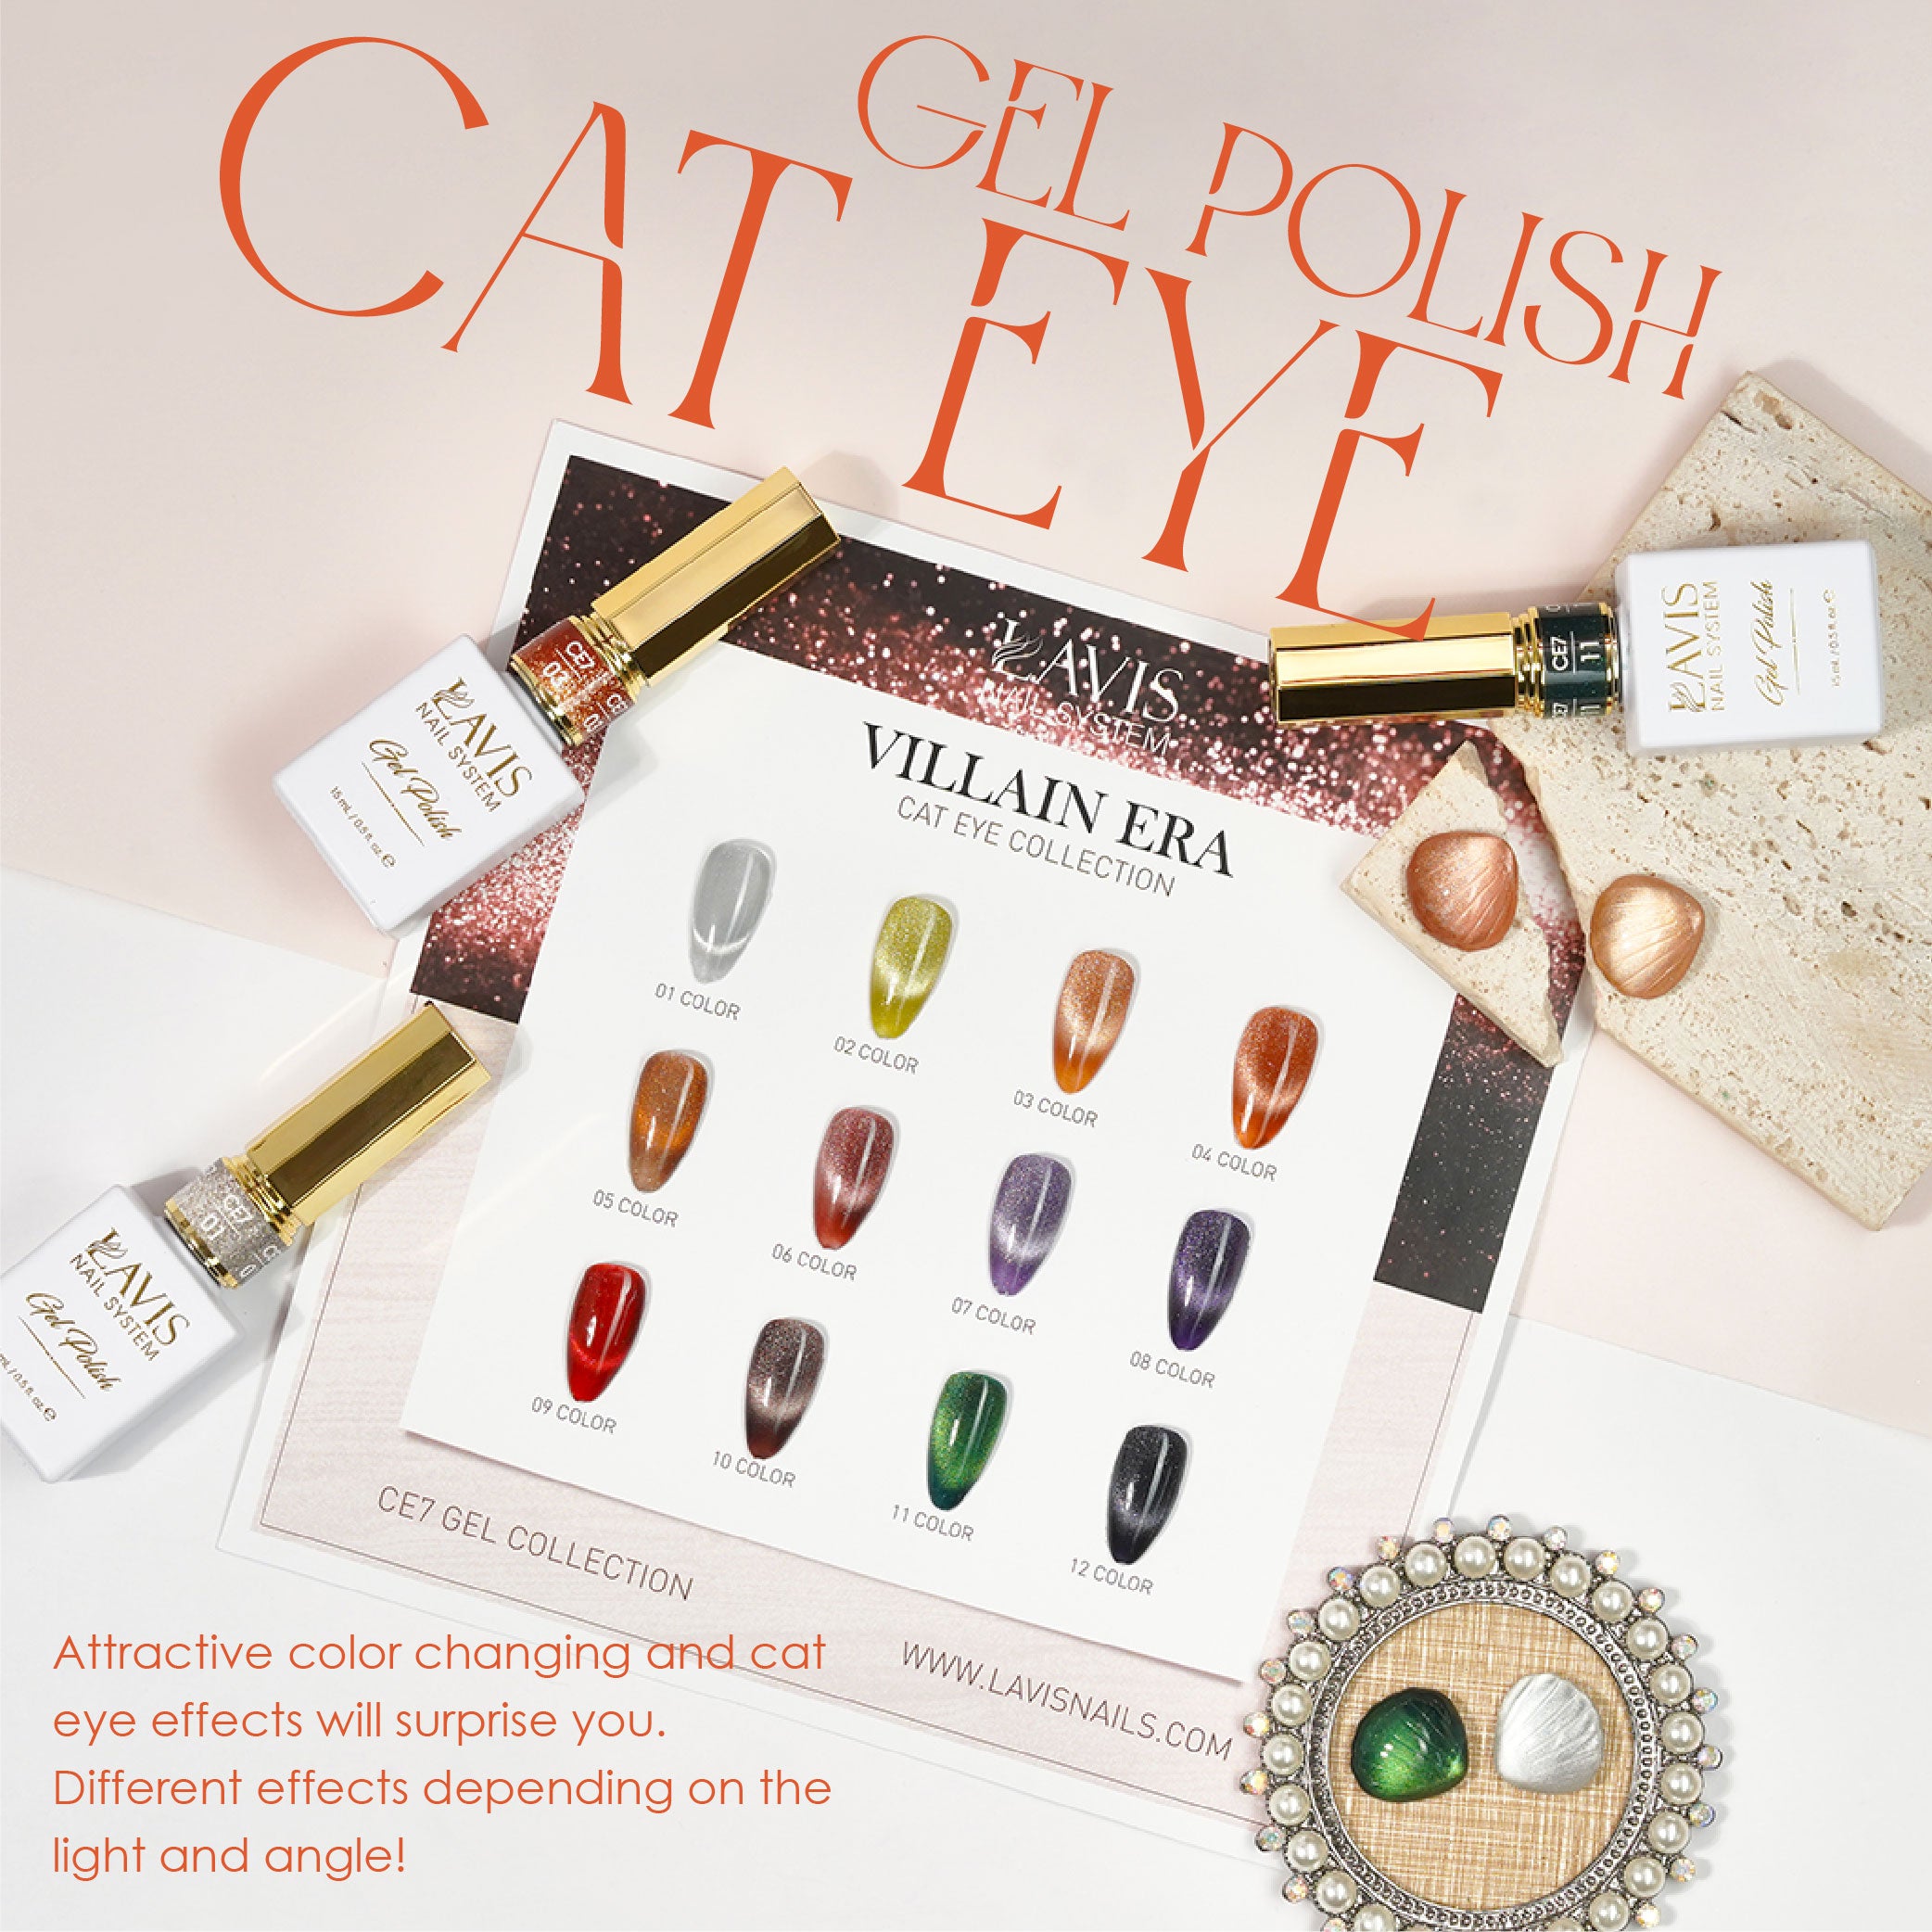 LAVIS Cat Eyes CE7 - 02 - Gel Polish 0.5 oz - VILLIAIN ERA Collection